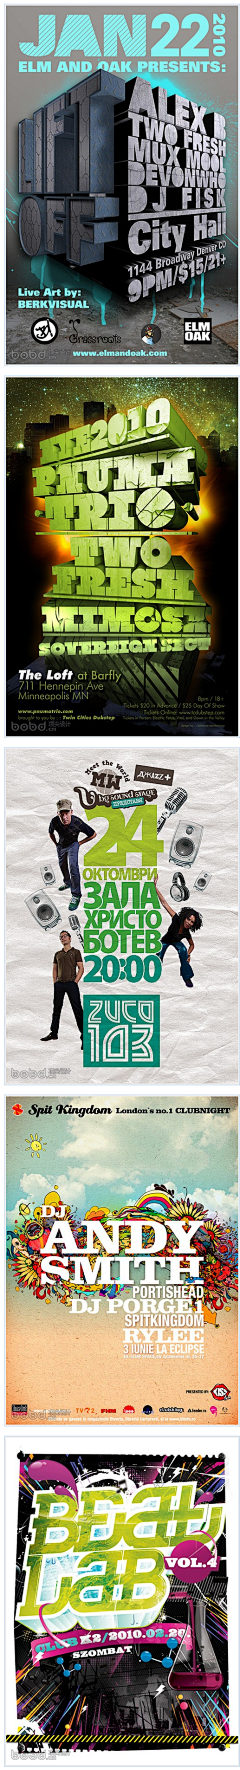 2kbYTDtJ采集到音乐类海报